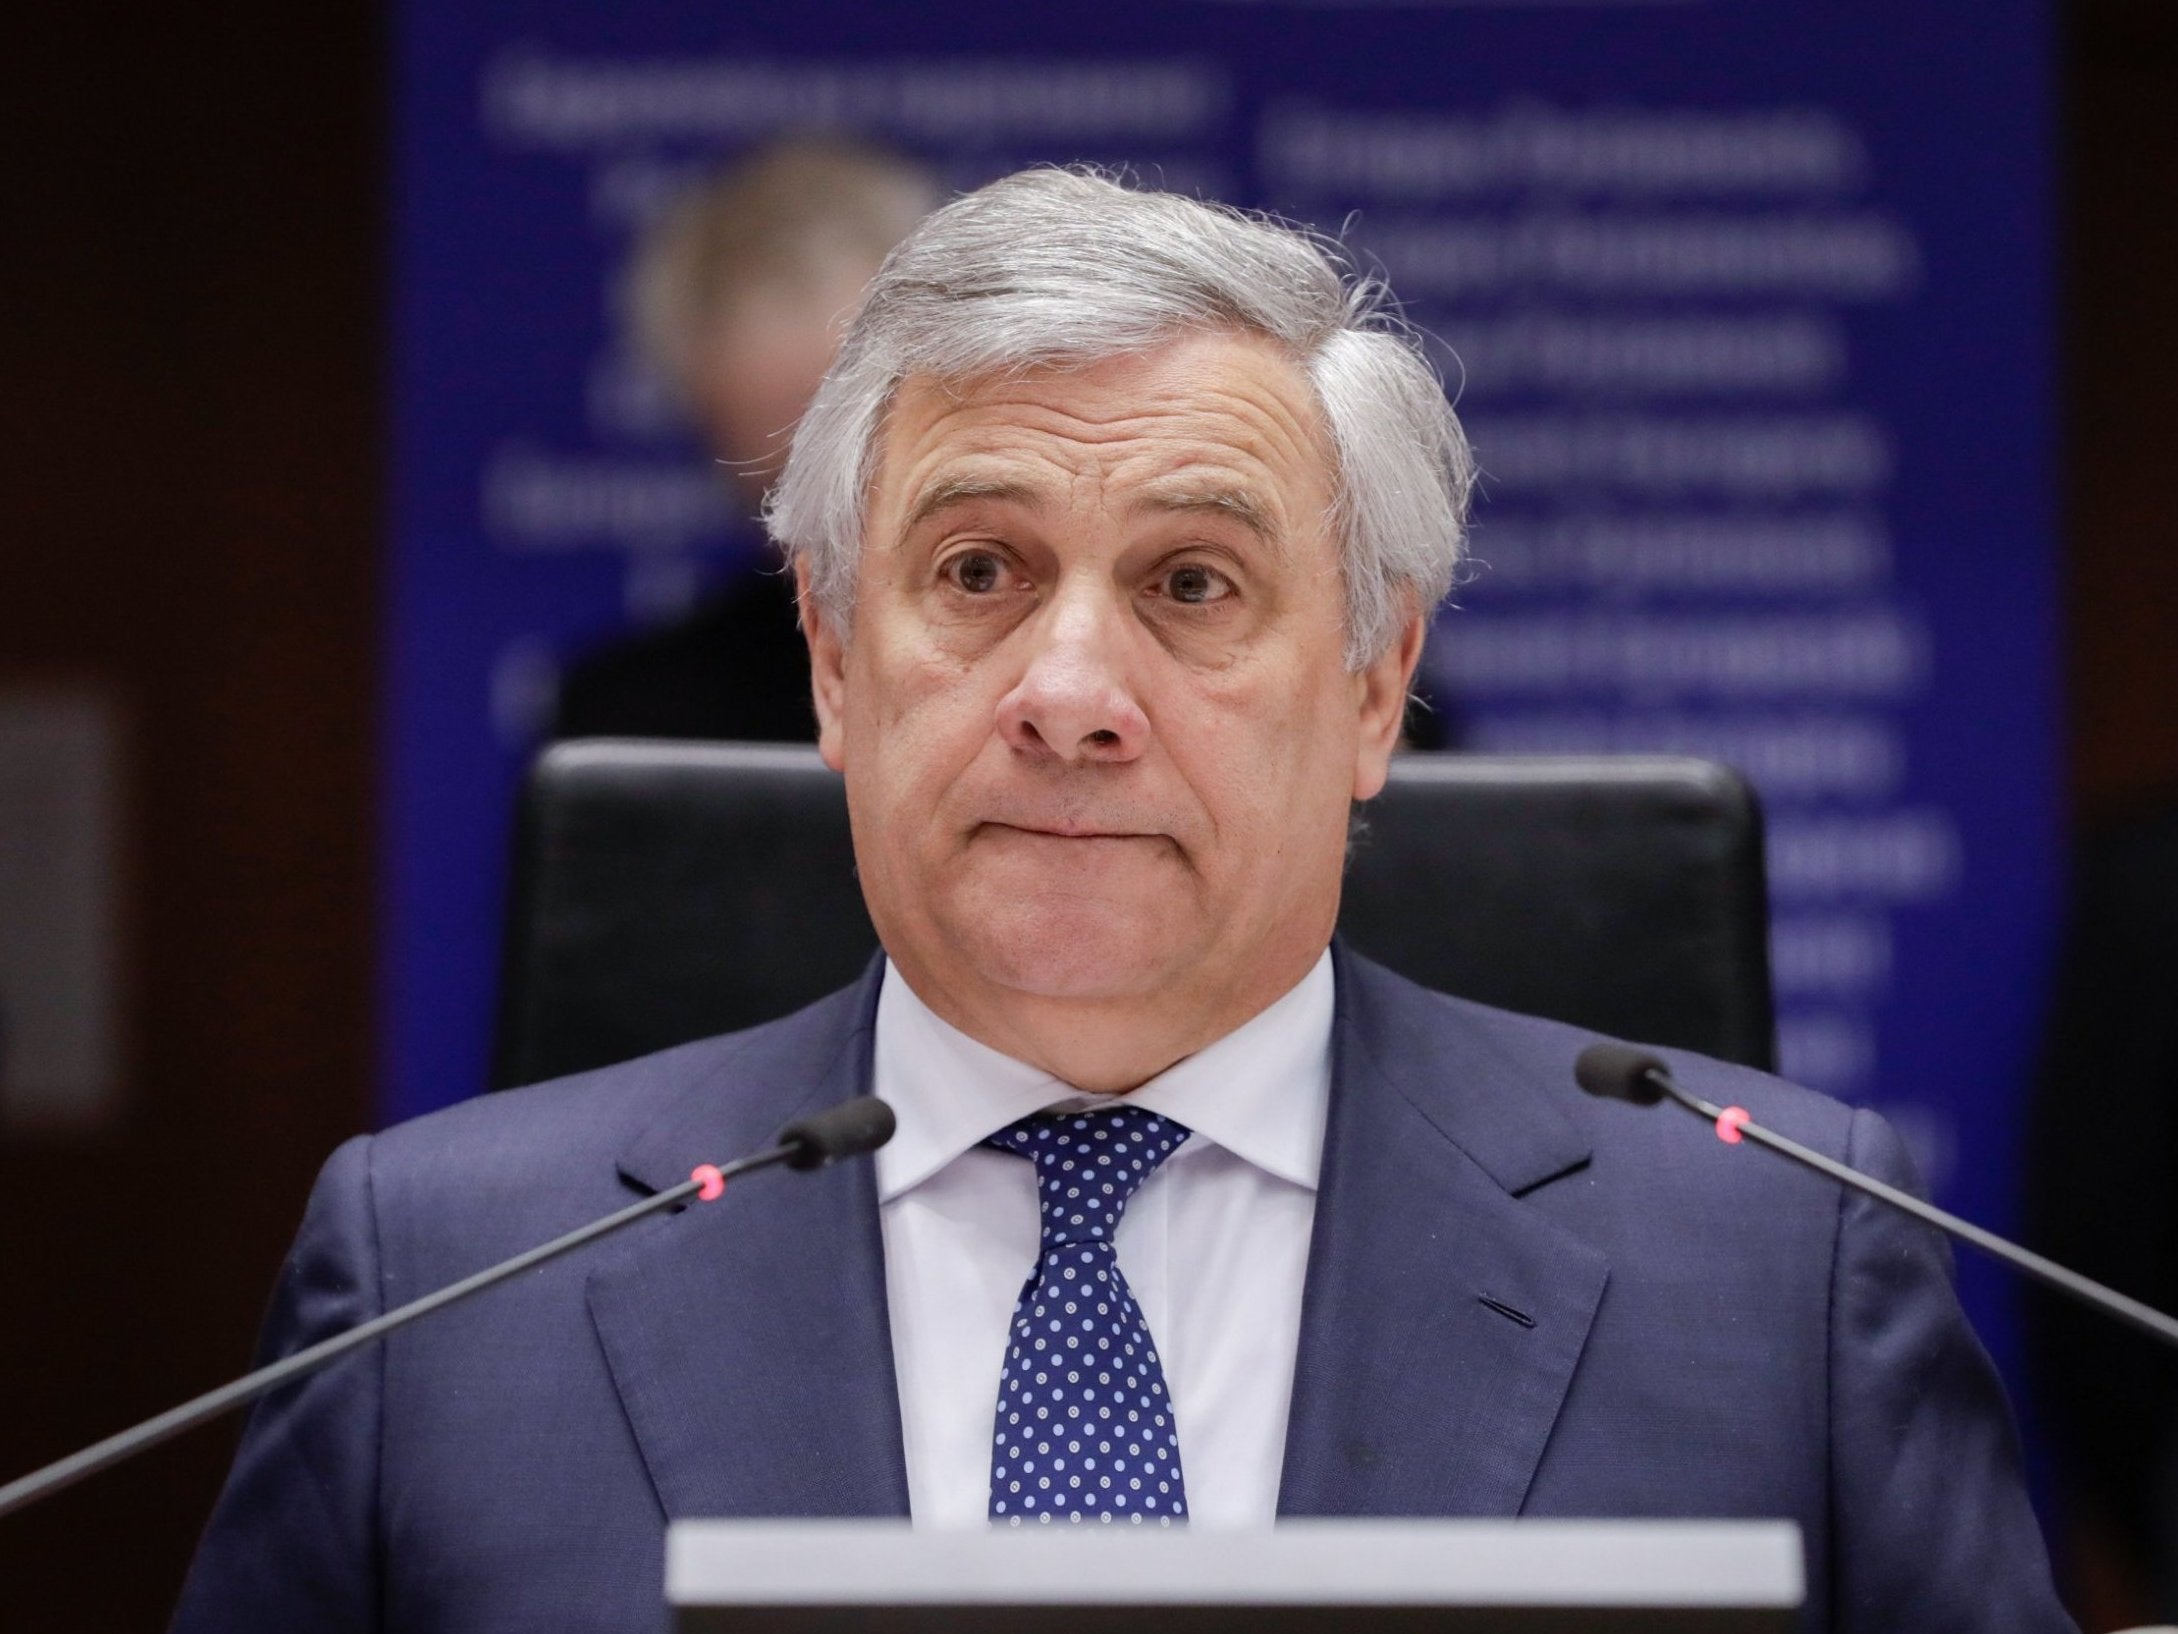 European parliament president Antonio Tajani